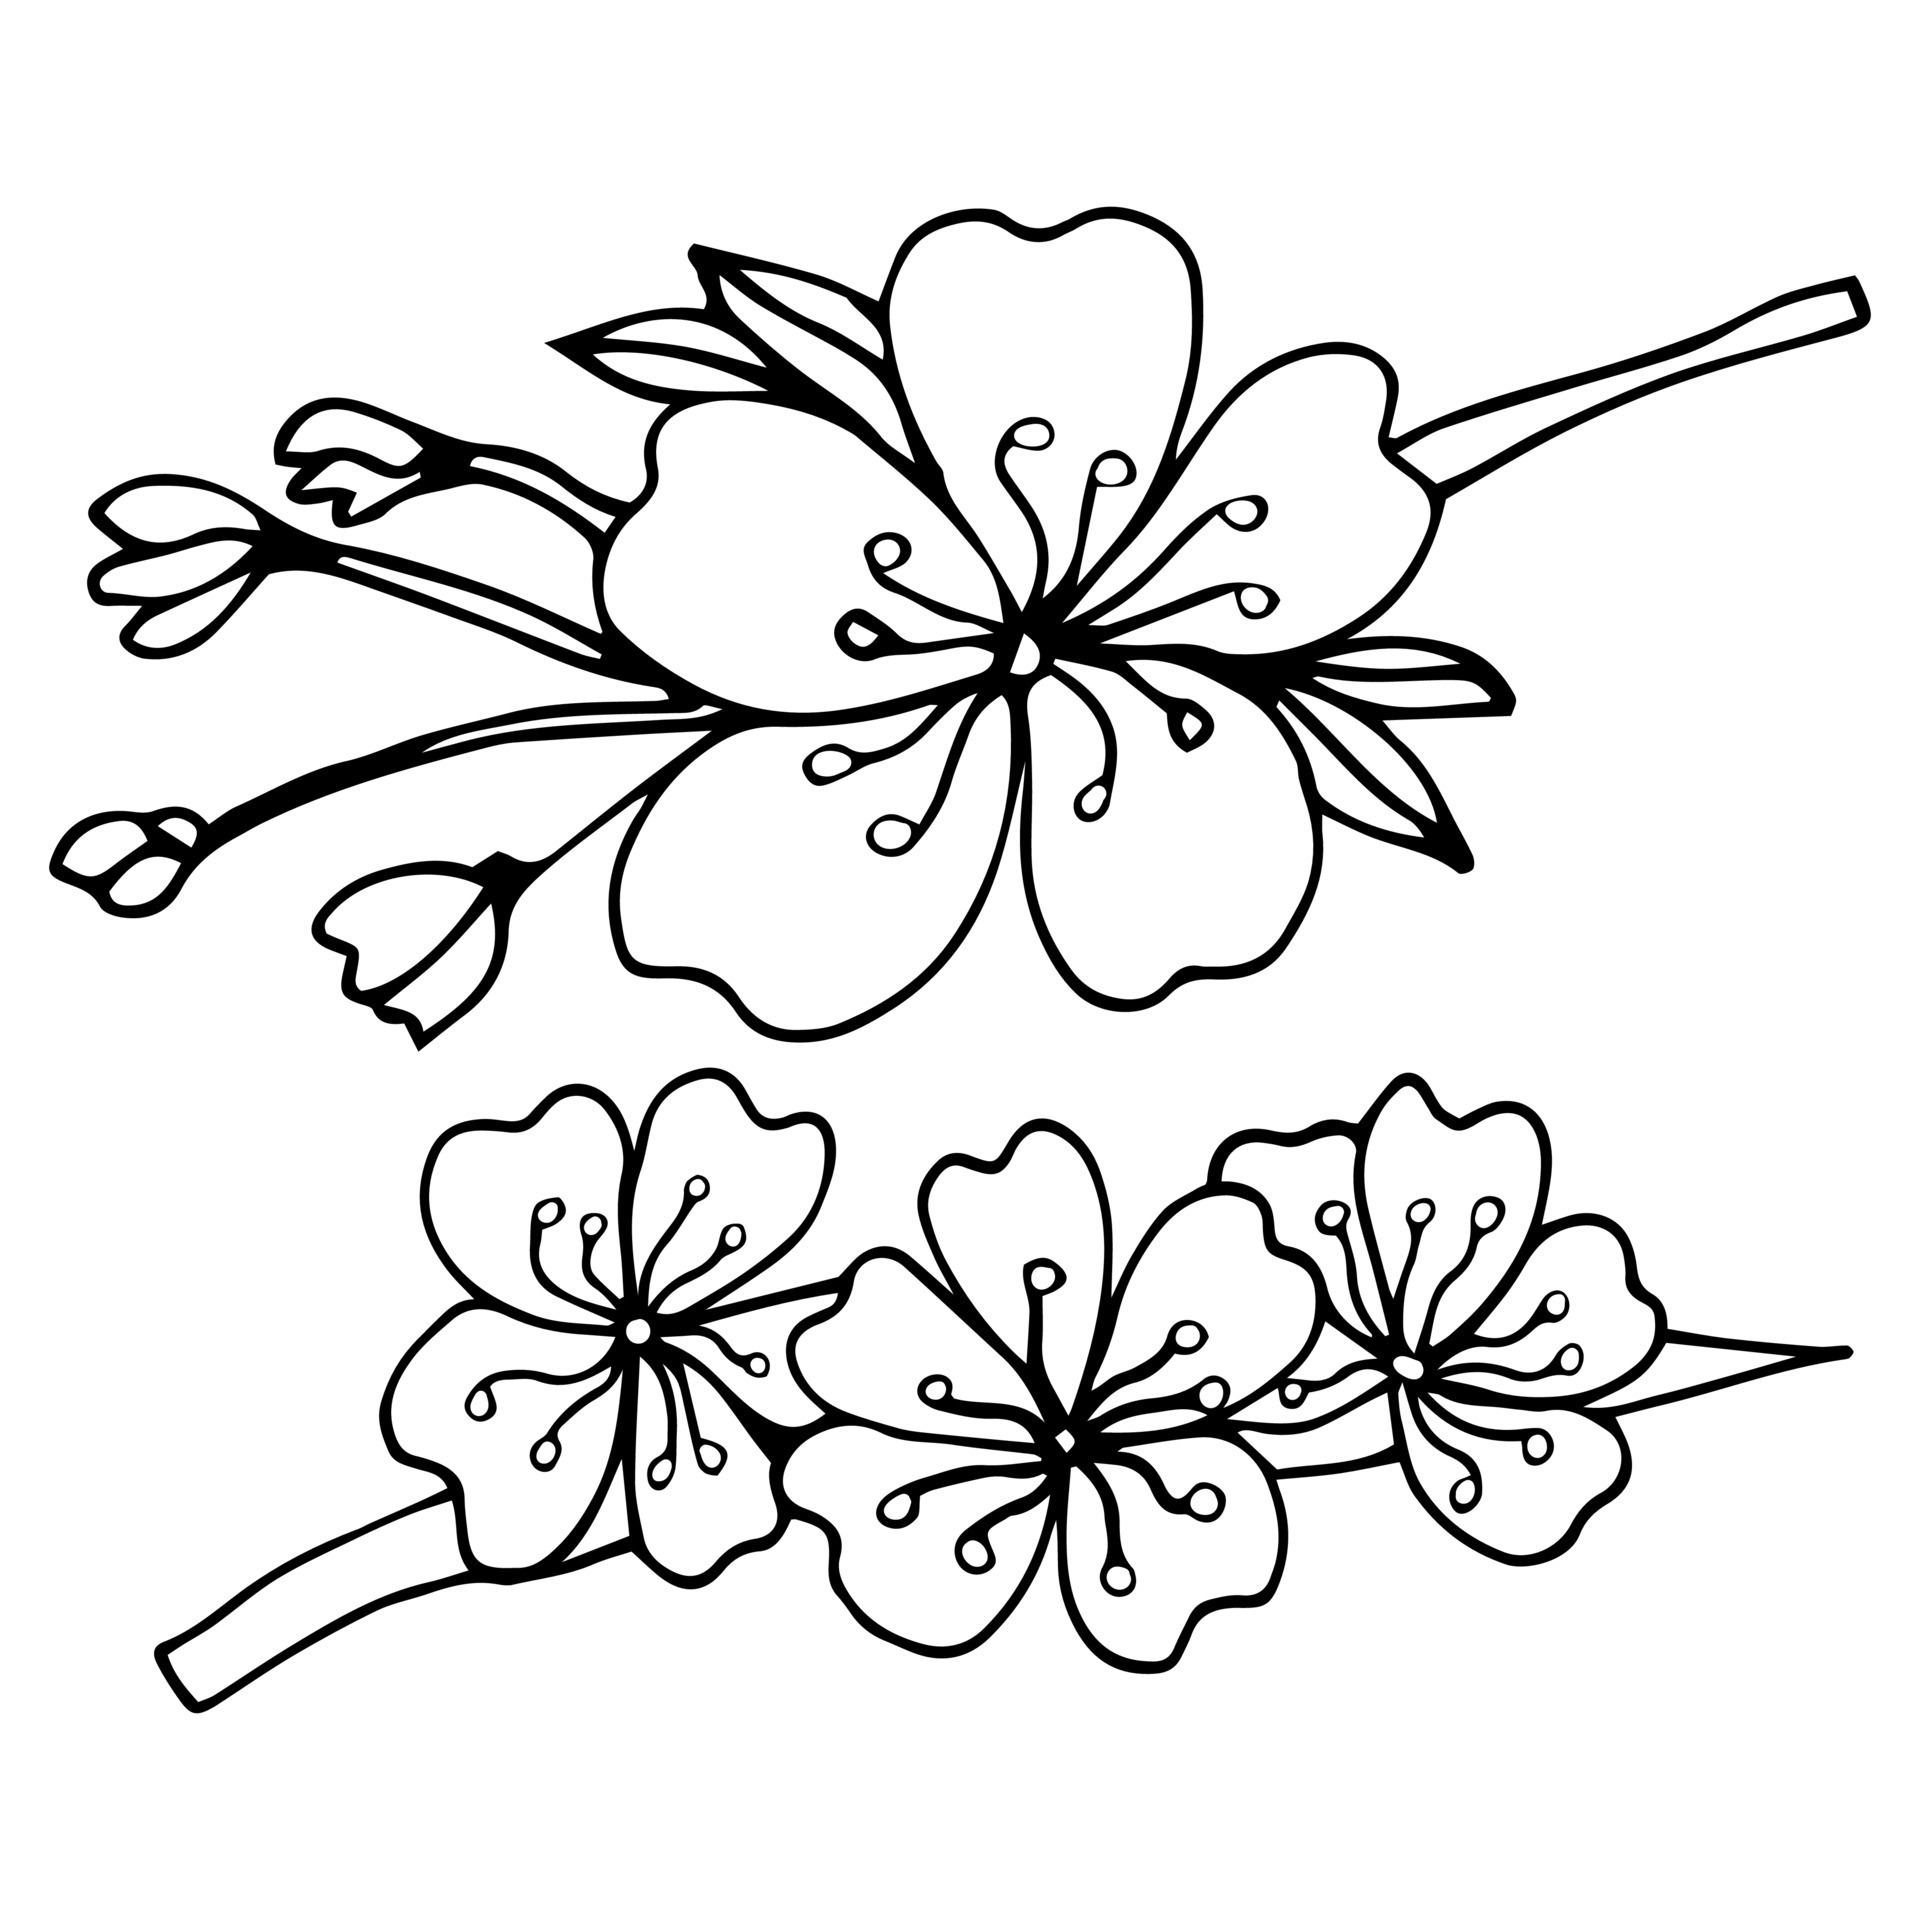 garabato botánico dibujado a mano de manzana, sakura, cerezo y flor de  ciruelo. ilustración de vector floral en contorno negro sobre un fondo  blanco para colorear. 14375087 Vector en Vecteezy